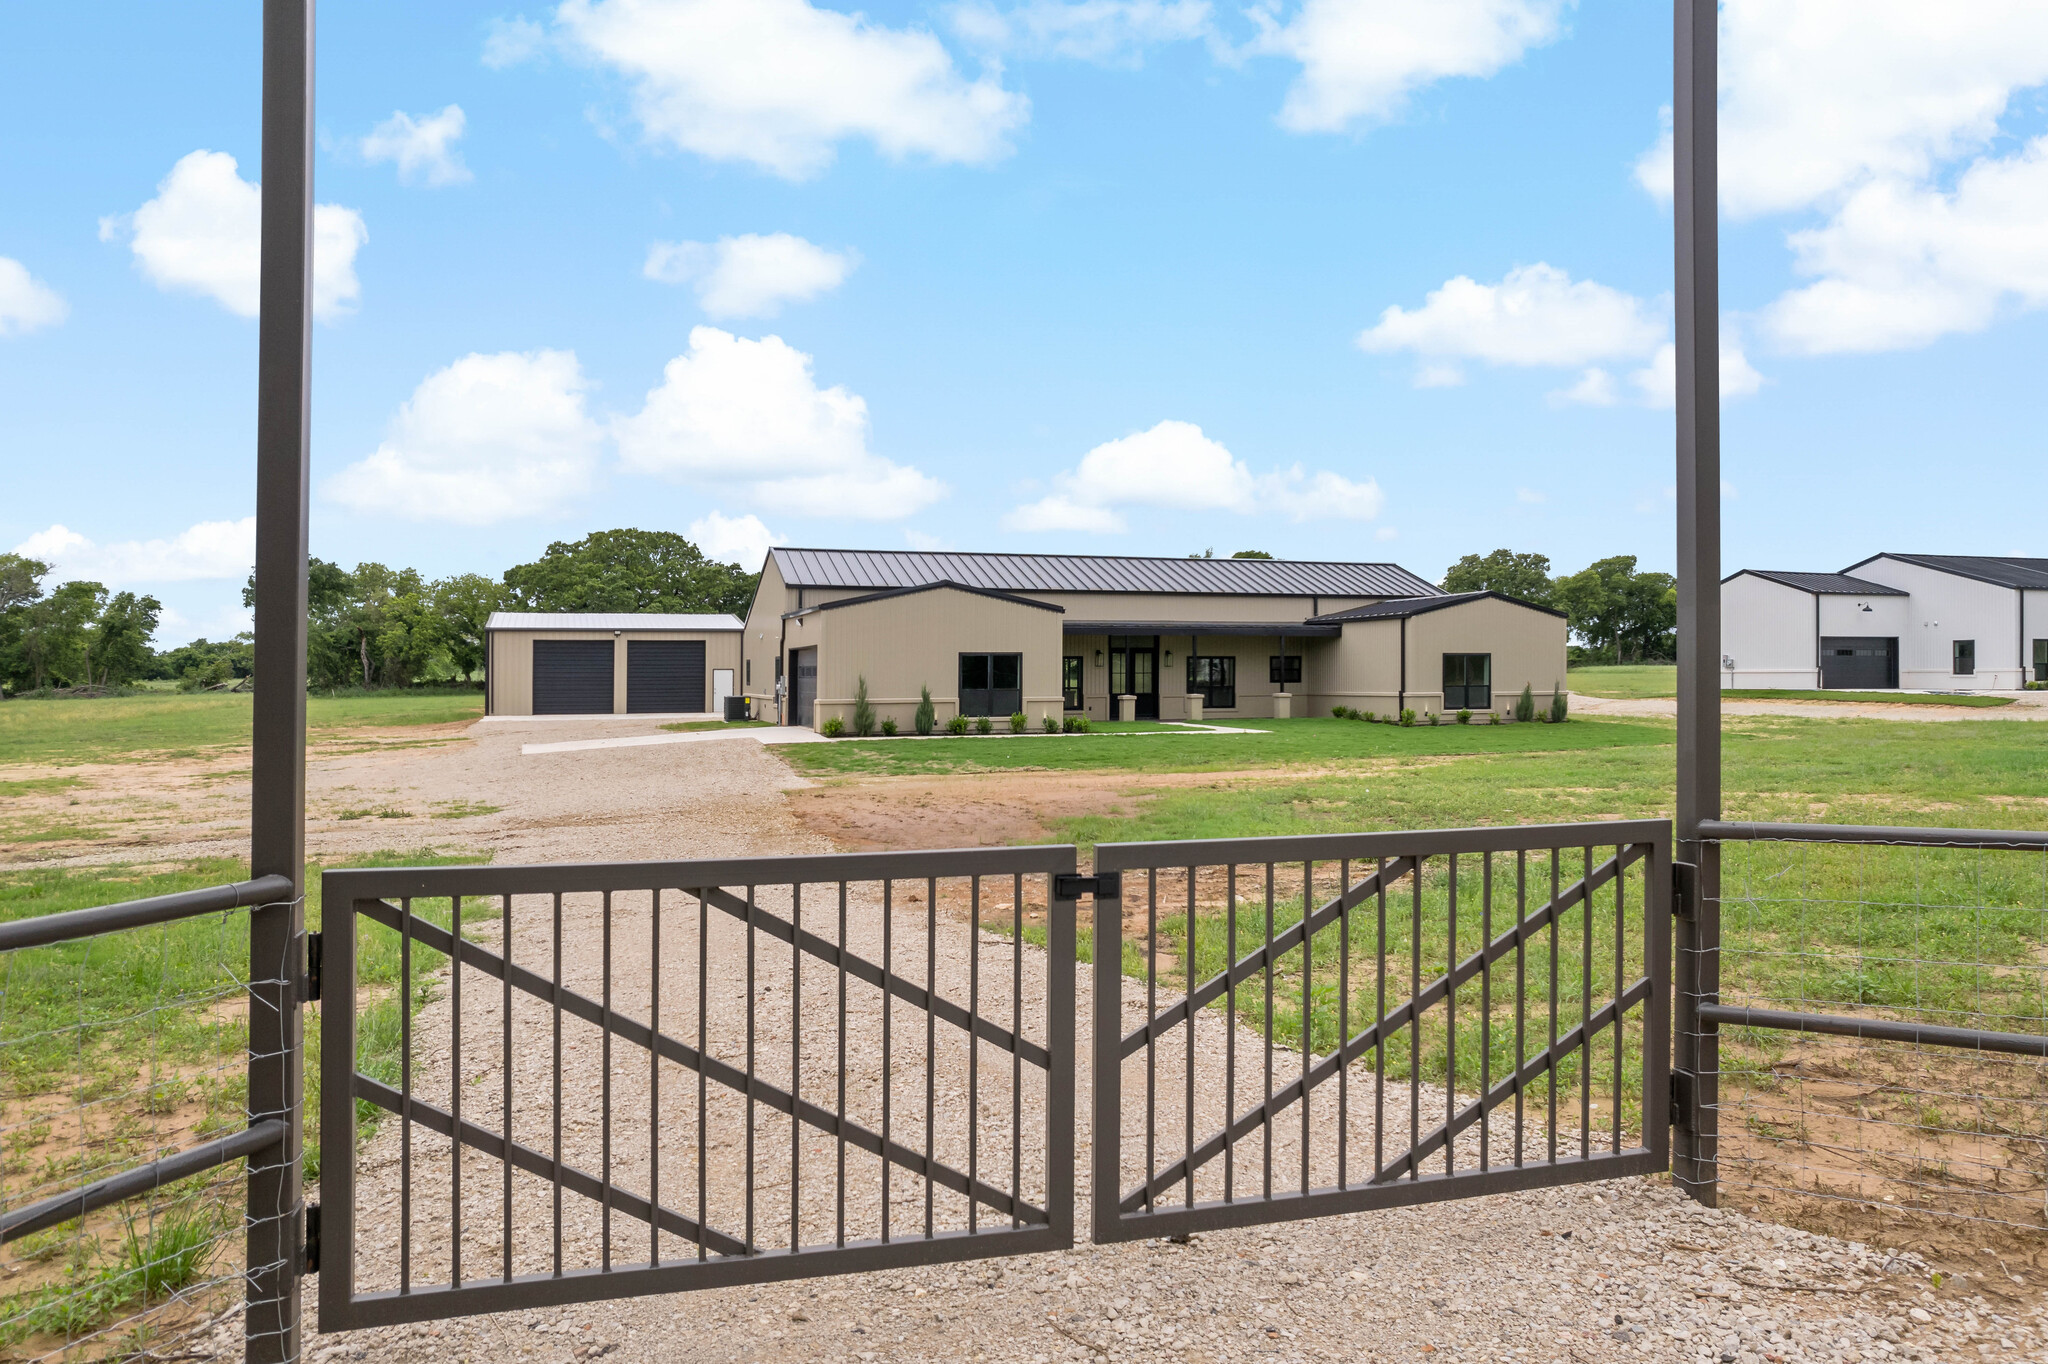 Brand new barndominium with large detached workshop on 1.62 acres in Alvarado, Texas.